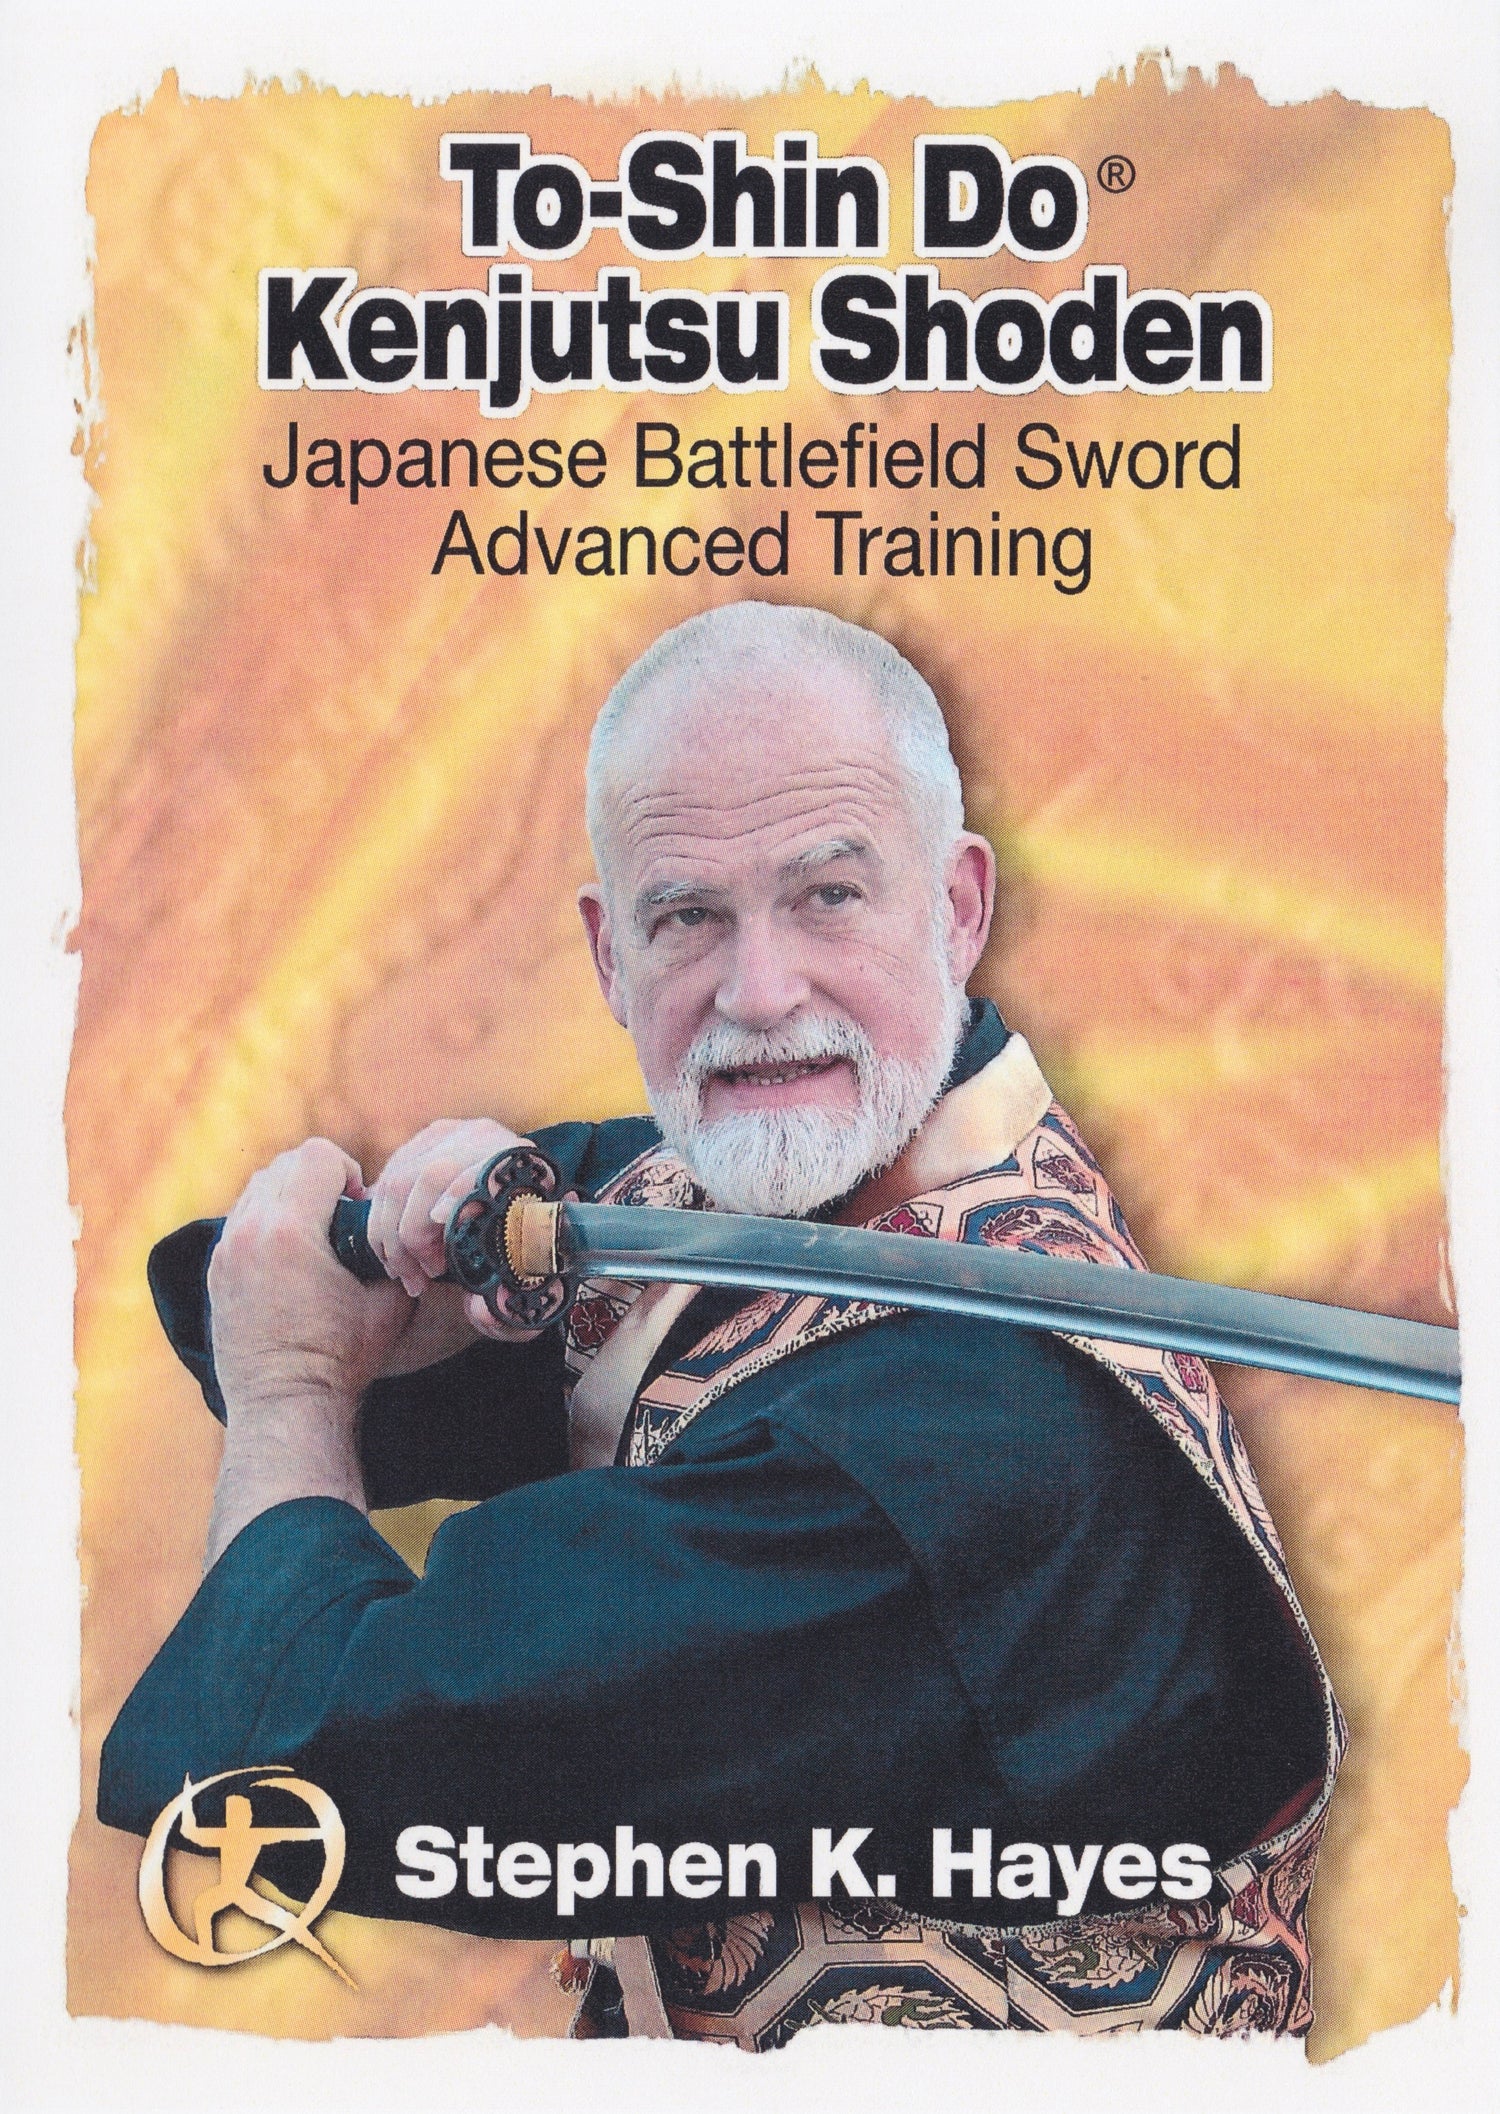 To-Shin-Do Kenjutsu Shoden 4 DVD Set by Stephen Hayes